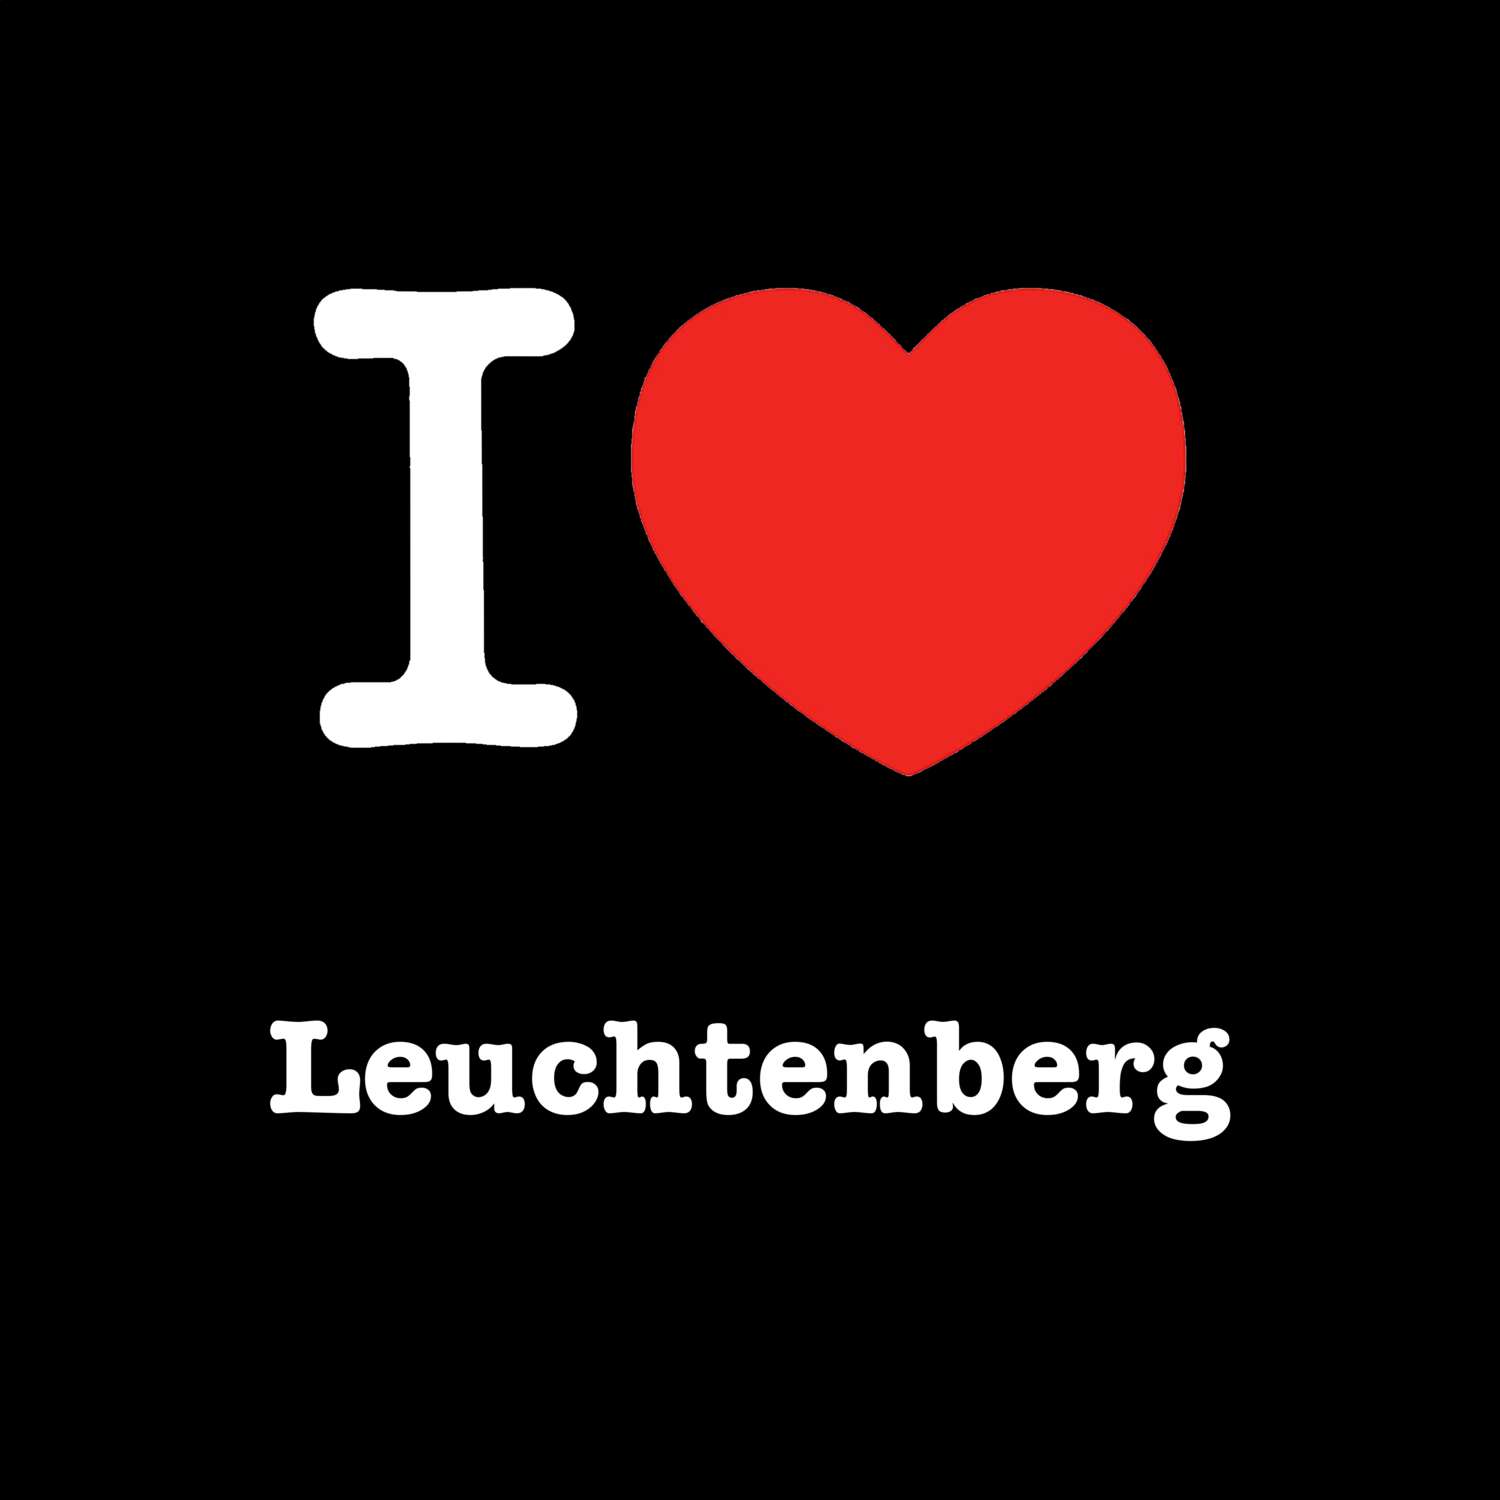 Leuchtenberg T-Shirt »I love«